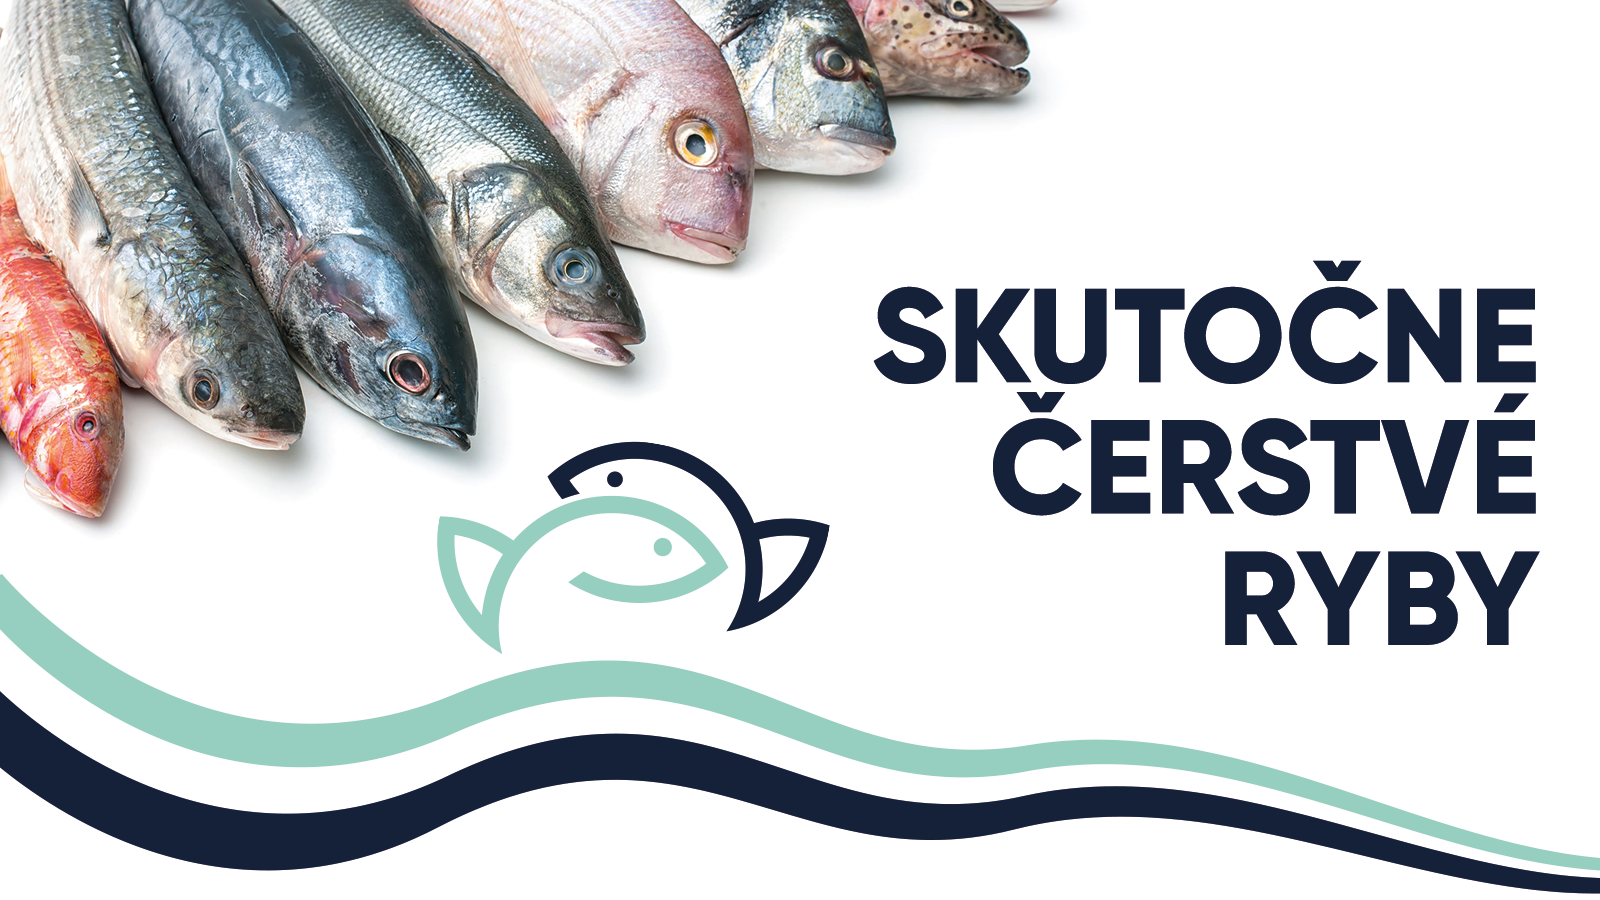 Morské ryby |najväčší výber rýb na SK| rybyspeciality.sk -  RYBYSPECIALITY.SK - Čerstvé ryby a morské plody